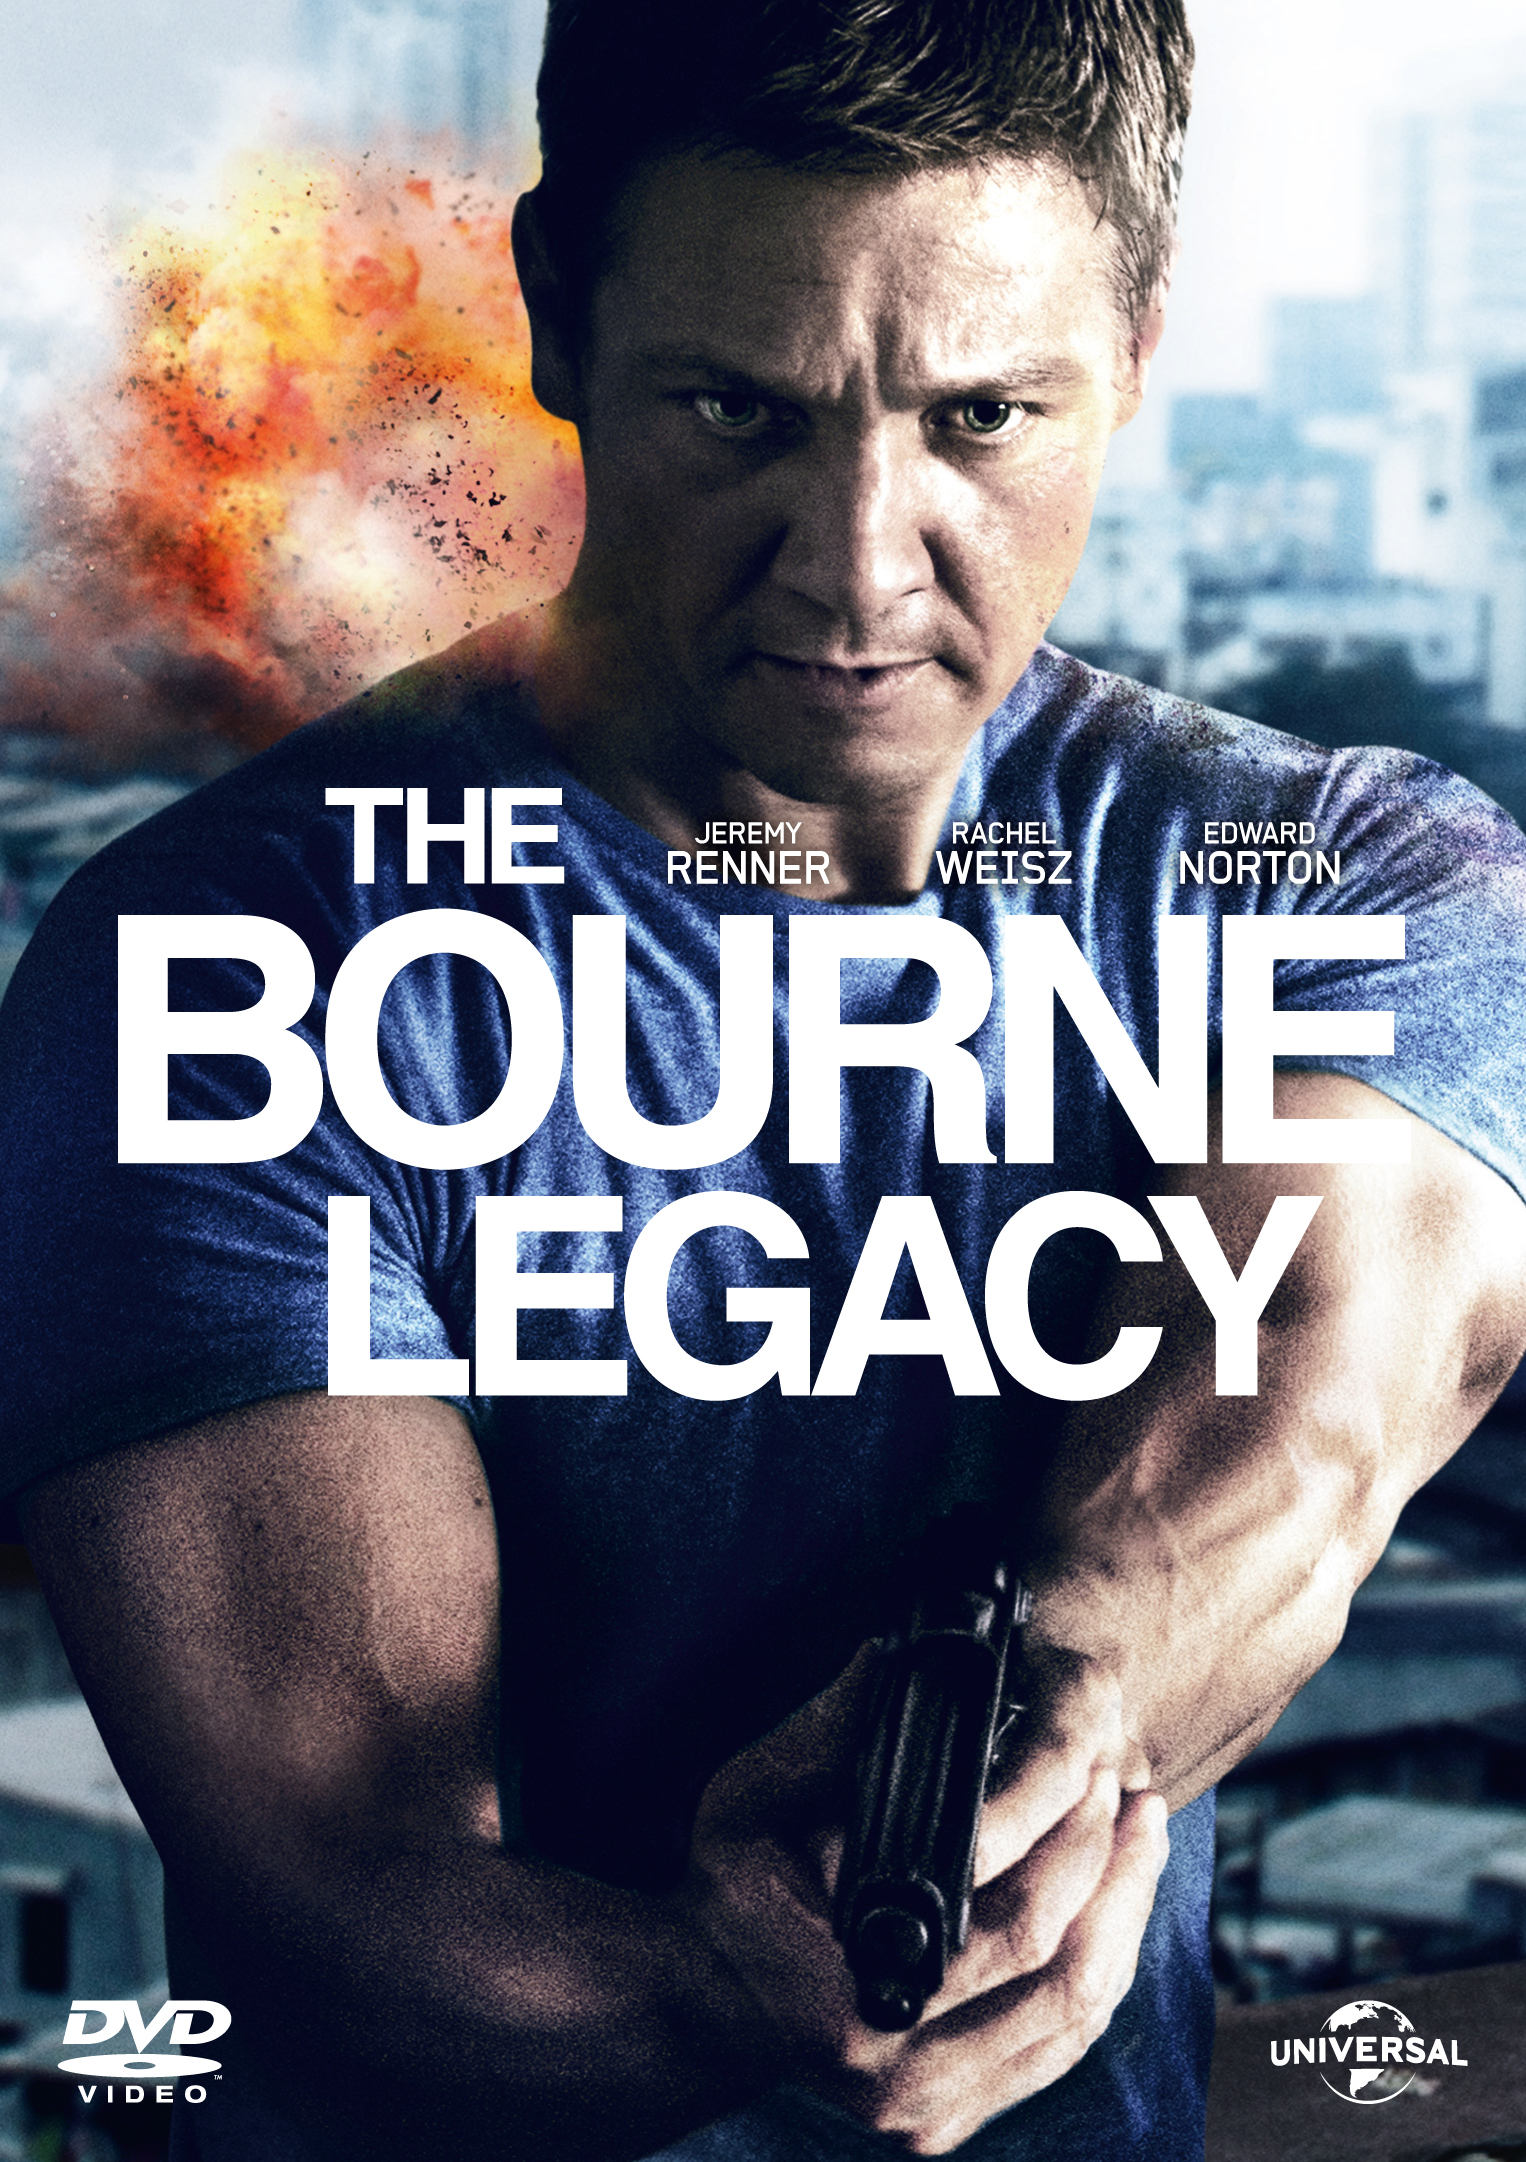 Bourne film series - Wikipedia